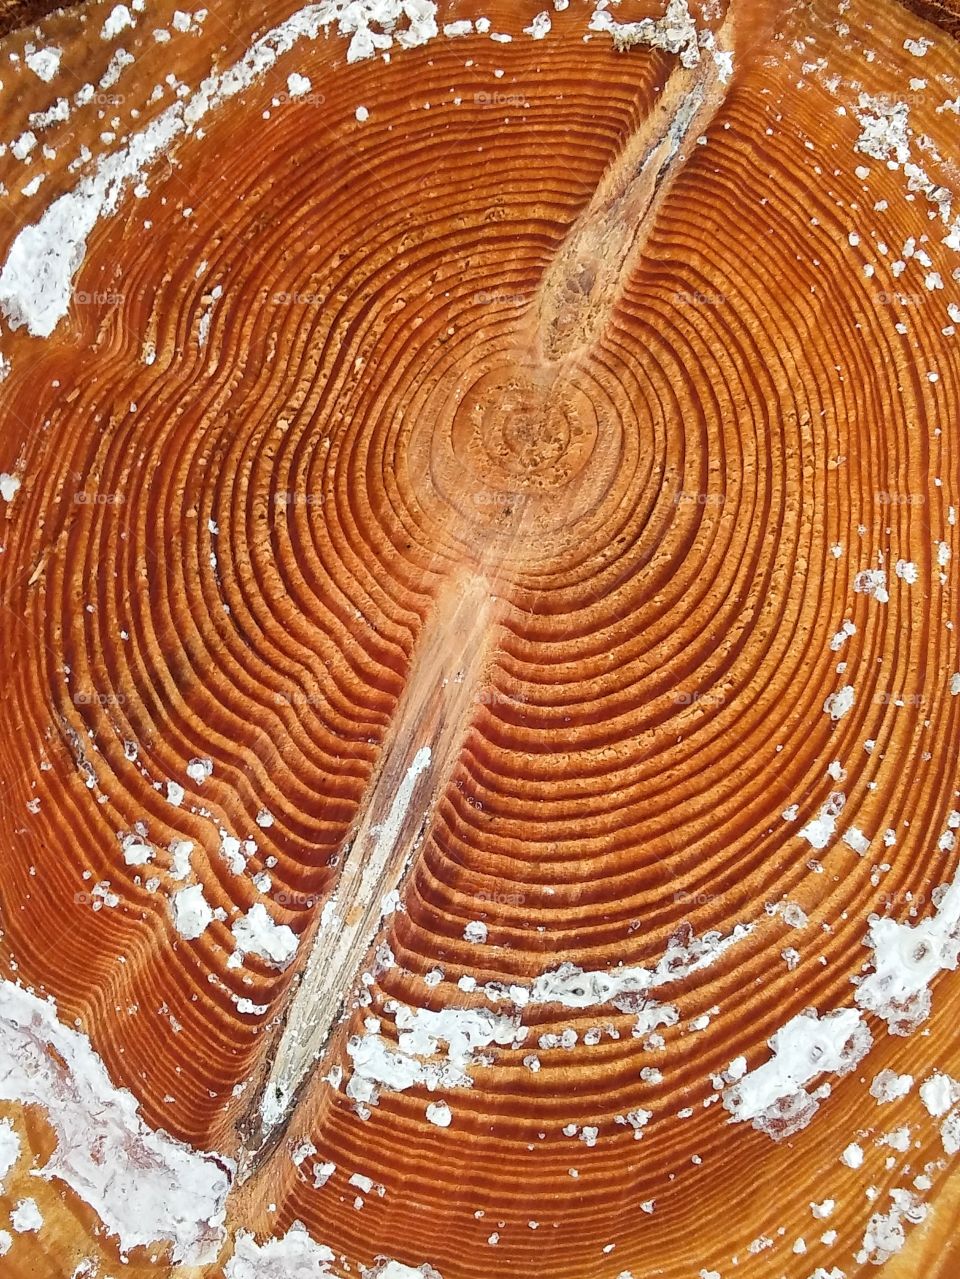 Tree rings on fresh cut stump.